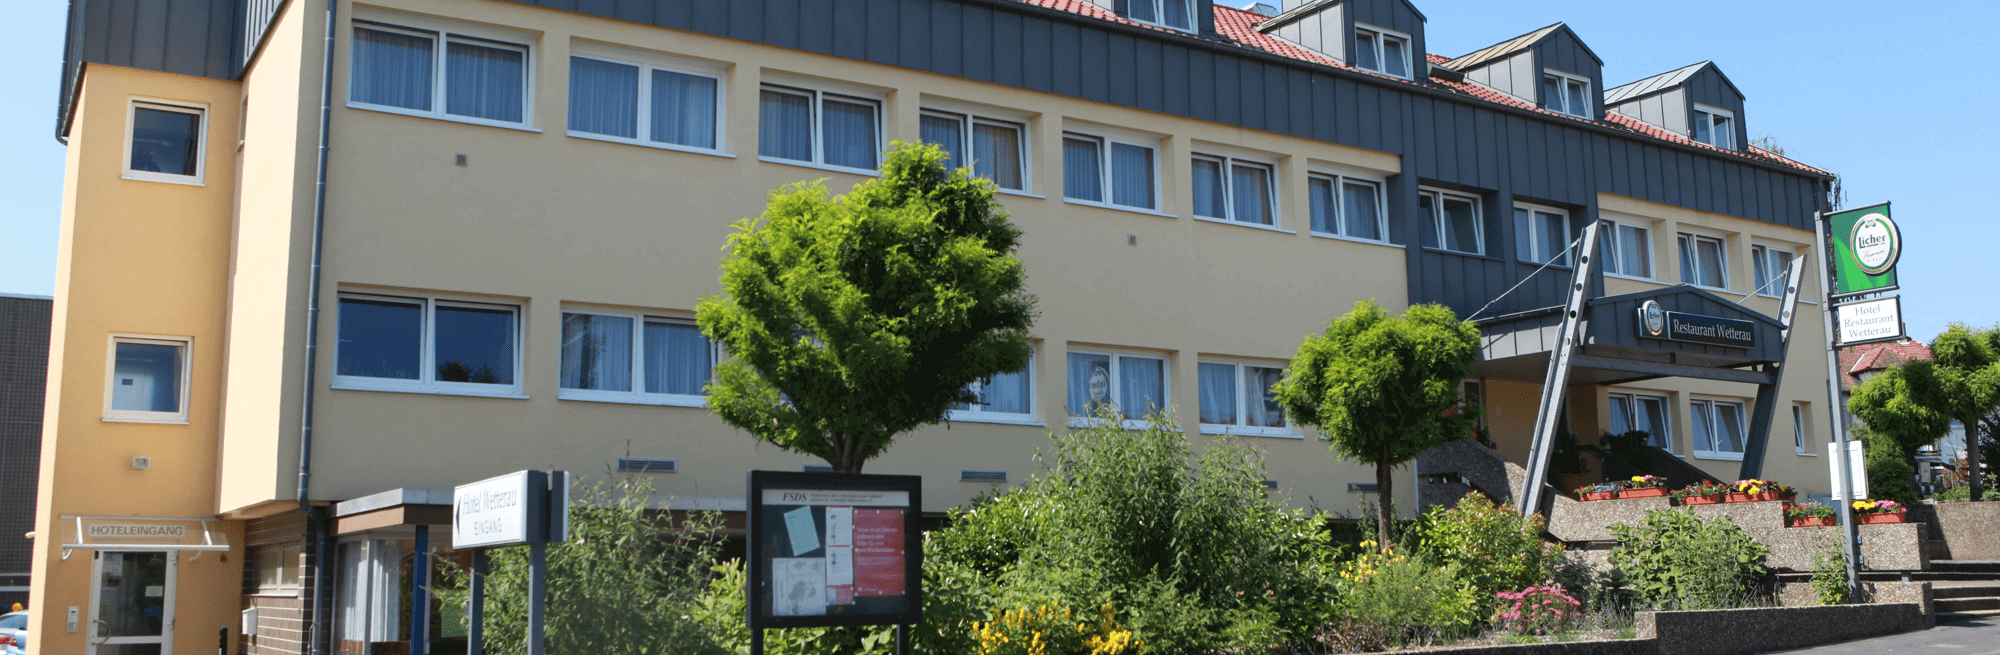 Hotel & Restaurant Wetterau in Wölfersheim bei Nidda